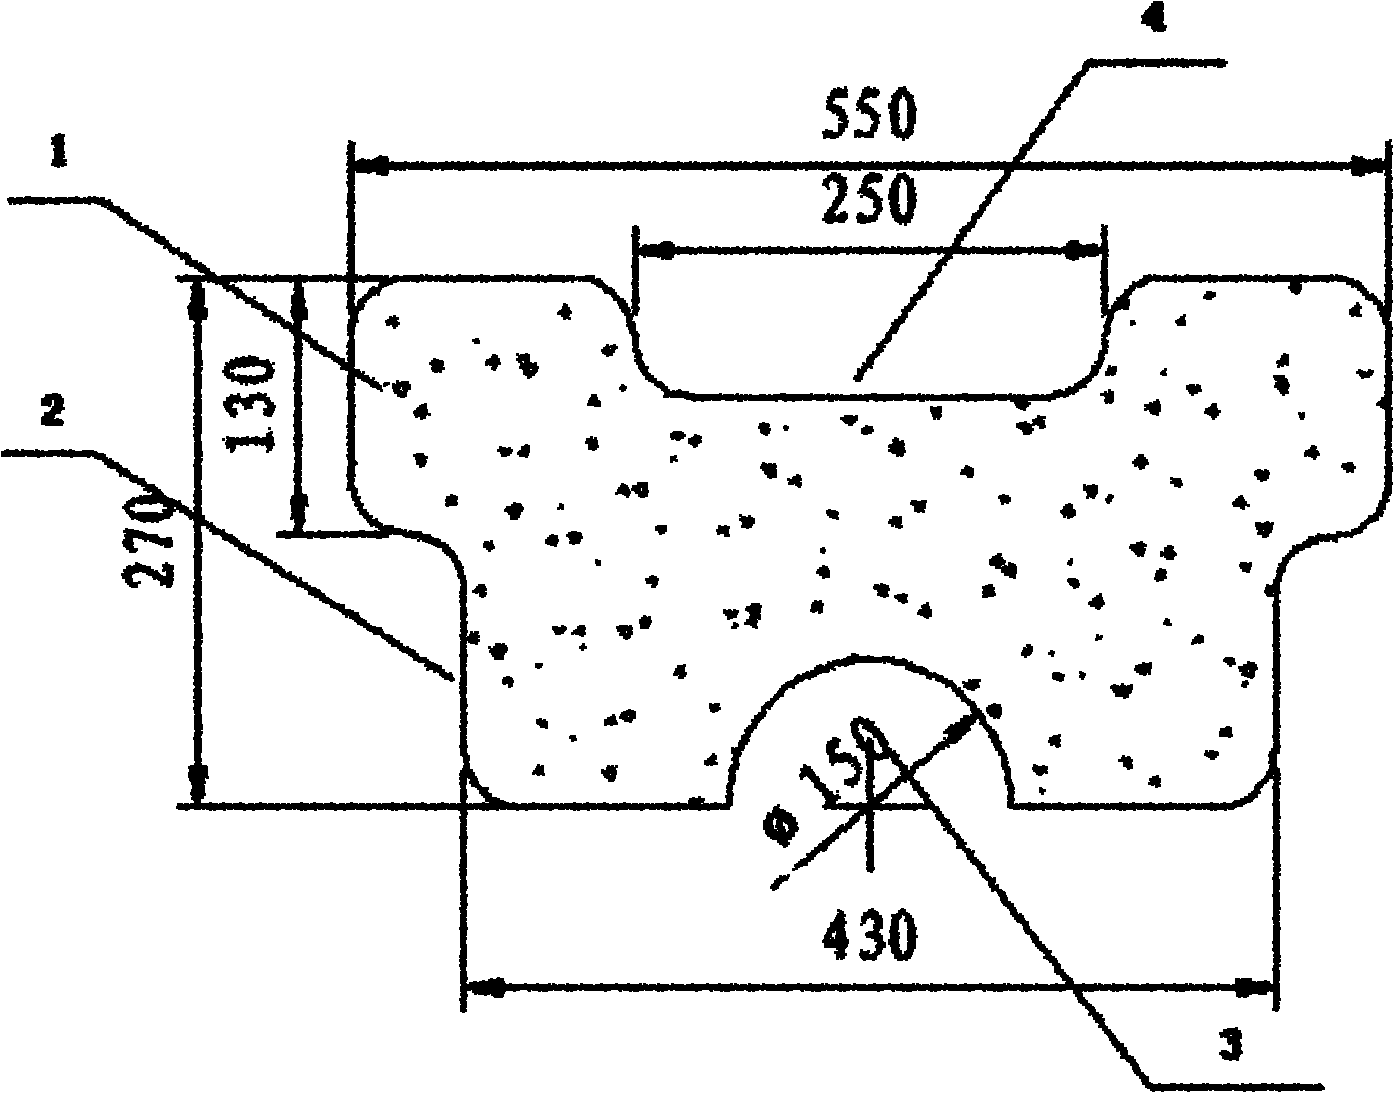 Self-embedded porous concrete block